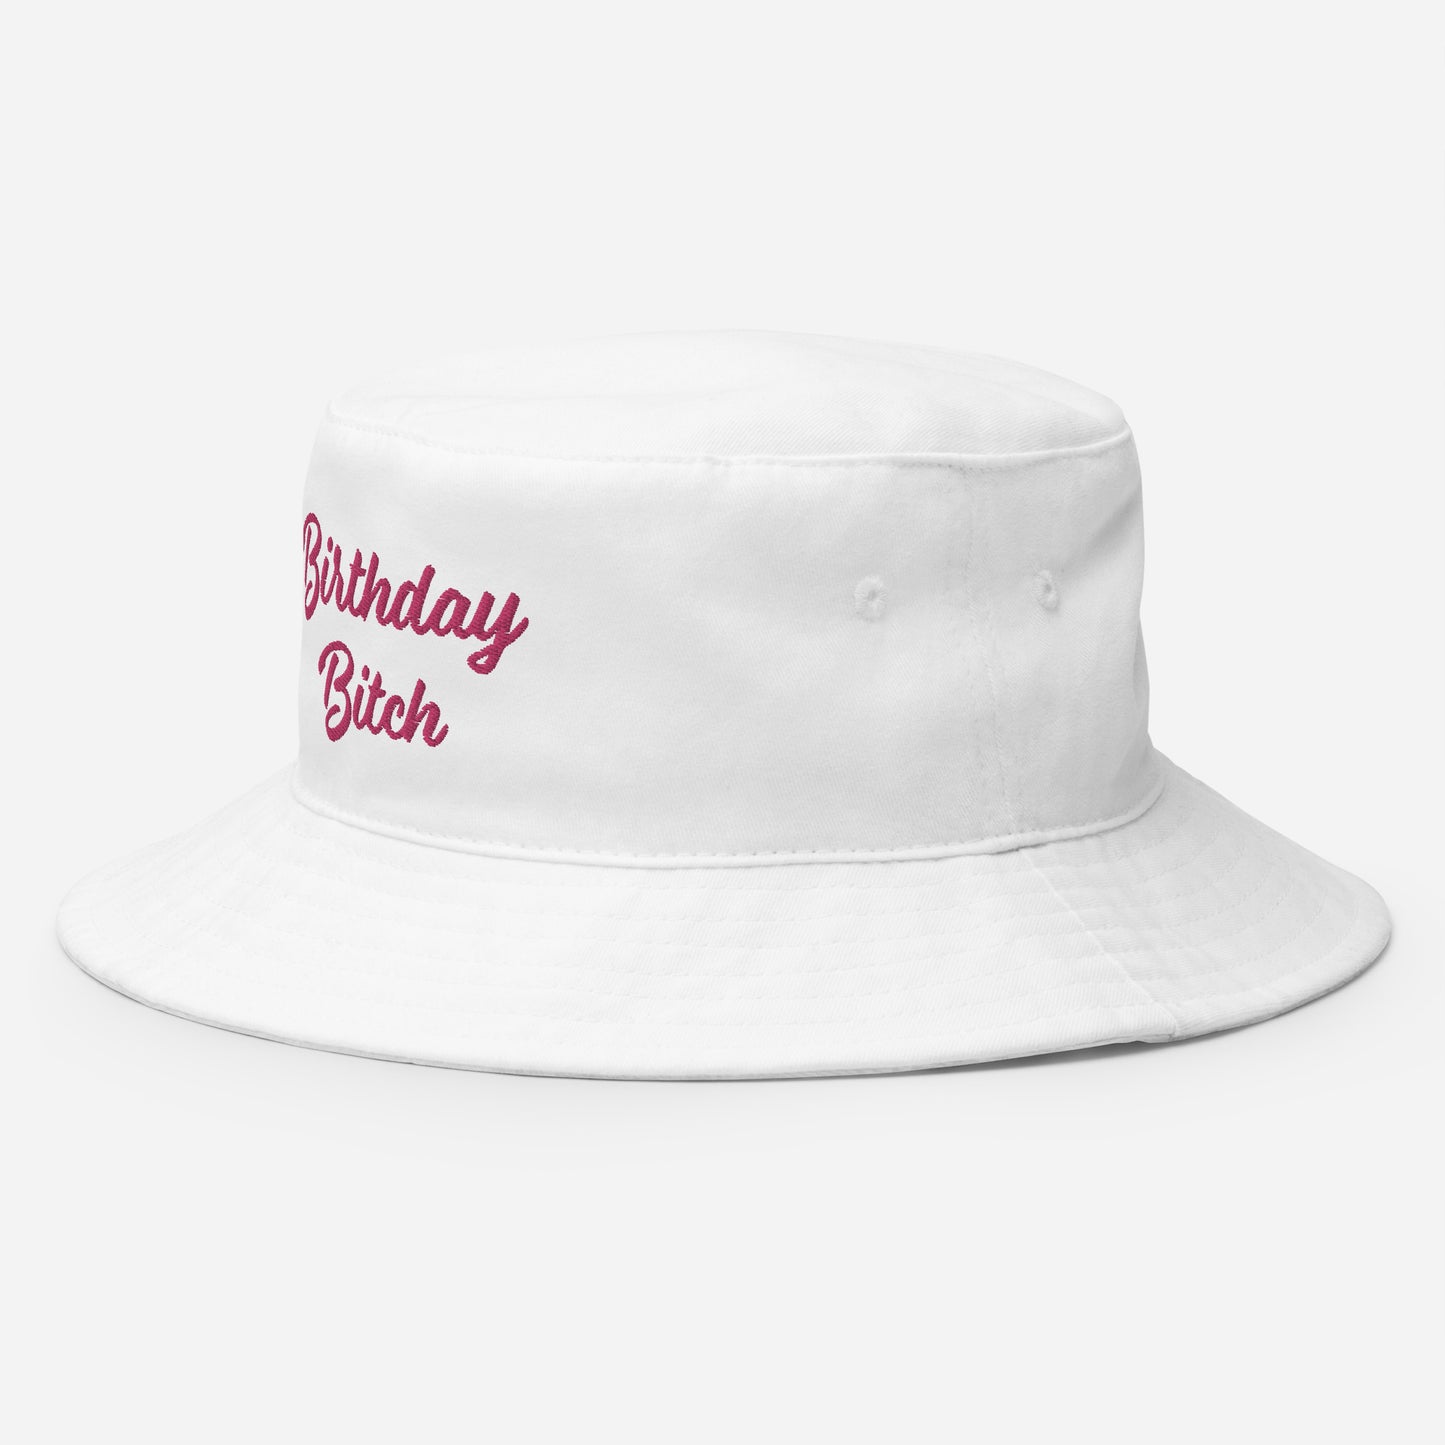 Birthday Bitch | Bucket Hat